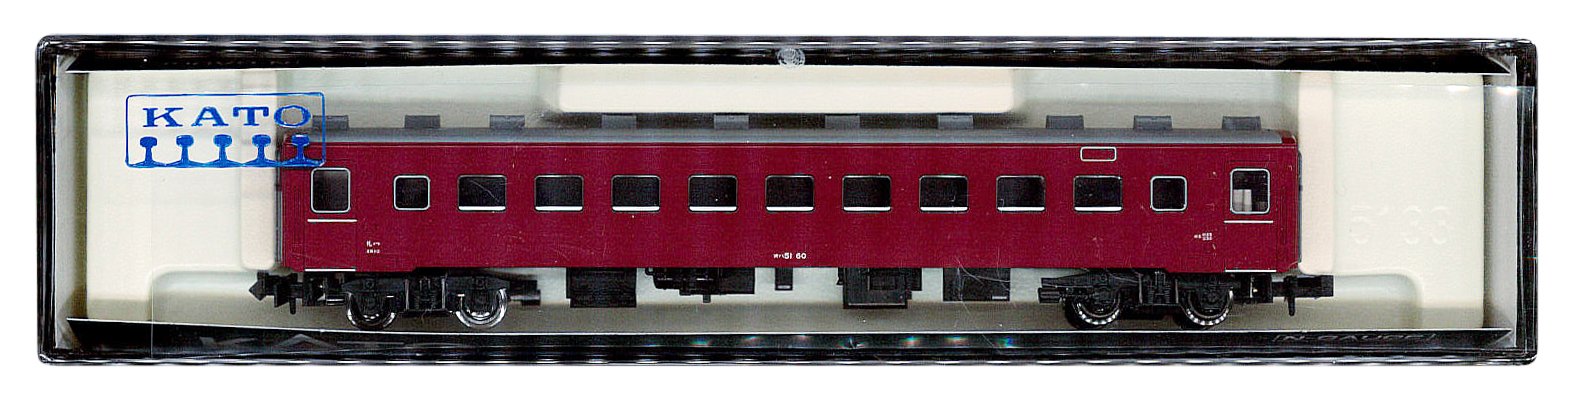 Kato N Gauge 5245 Model Railway Passenger Car - Oha51 Series